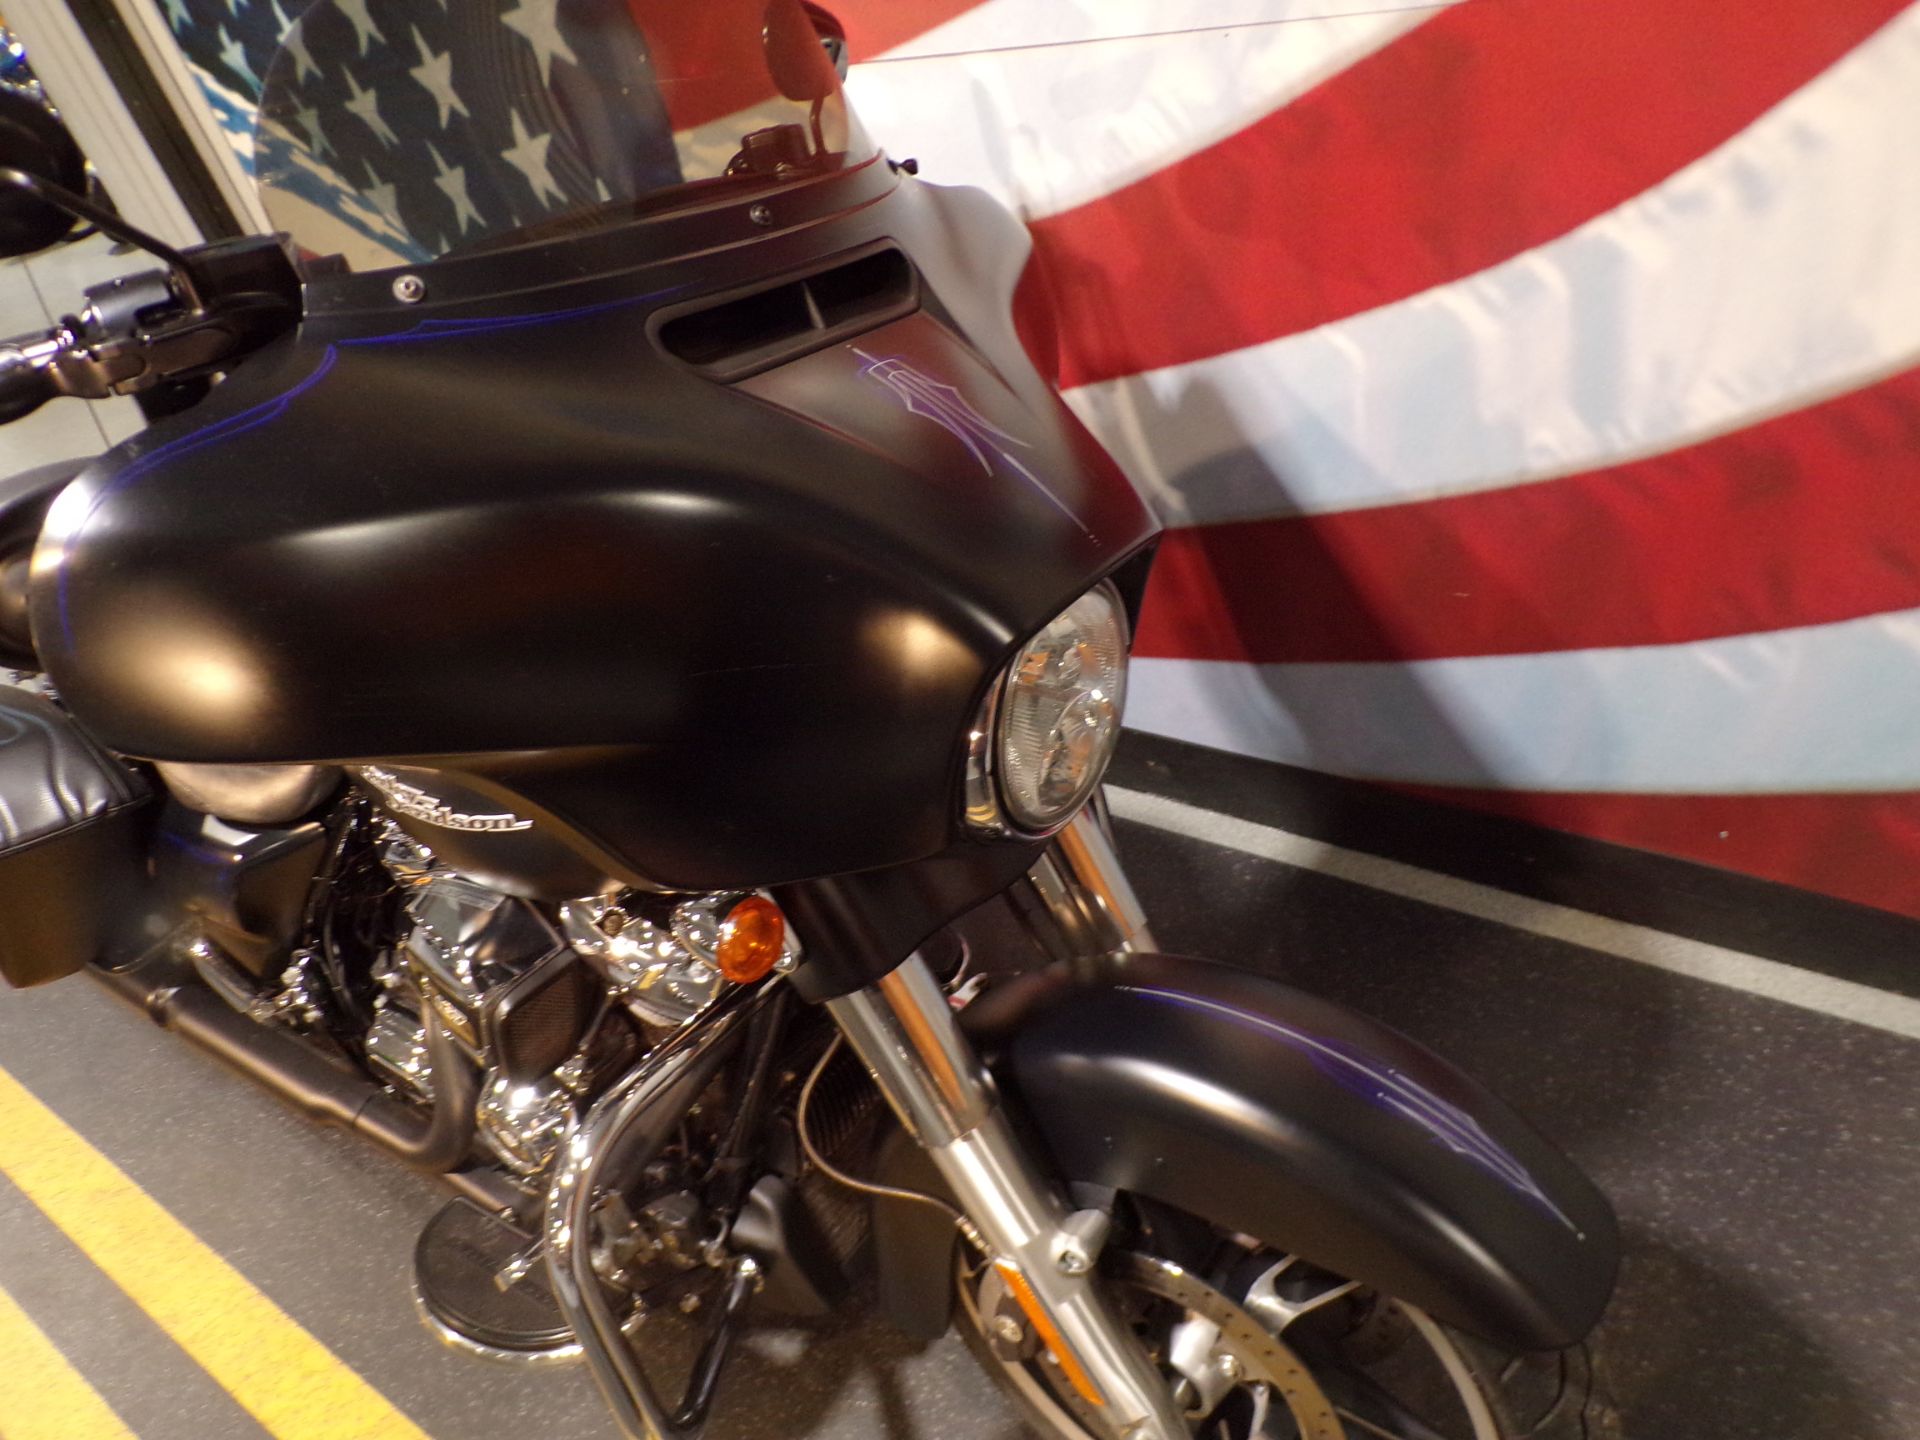 2017 Harley-Davidson Street Glide® Special in Honesdale, Pennsylvania - Photo 12